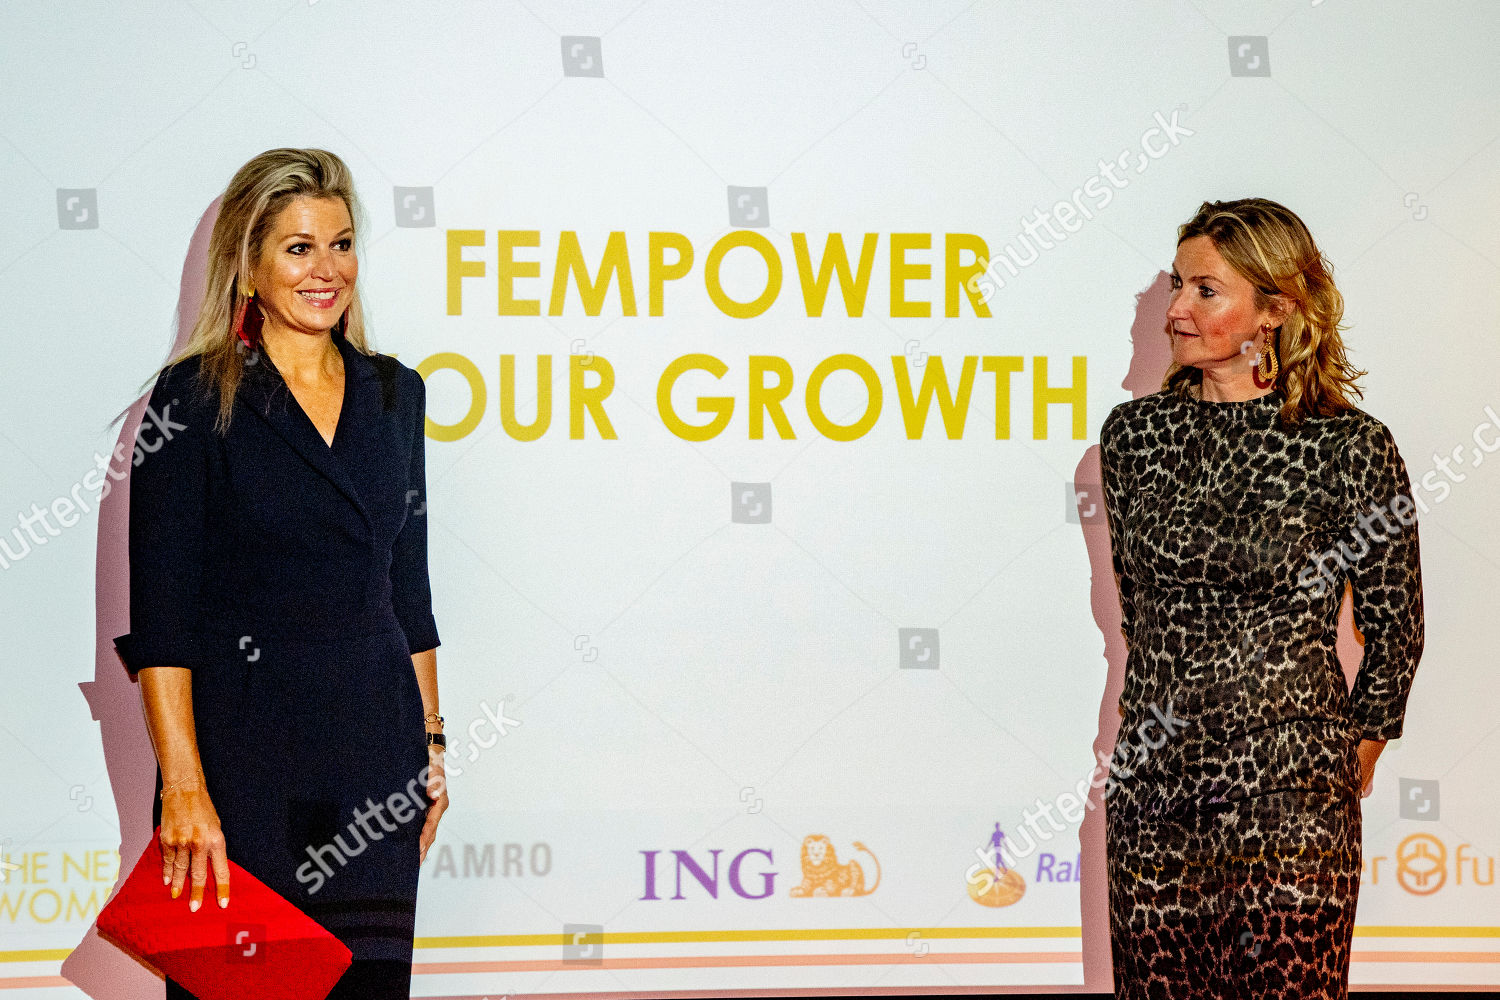 fempower-your-growth-event-dutch-development-bank-fmo-the-hague-netherlands-shutterstock-editorial-10407124f.jpg